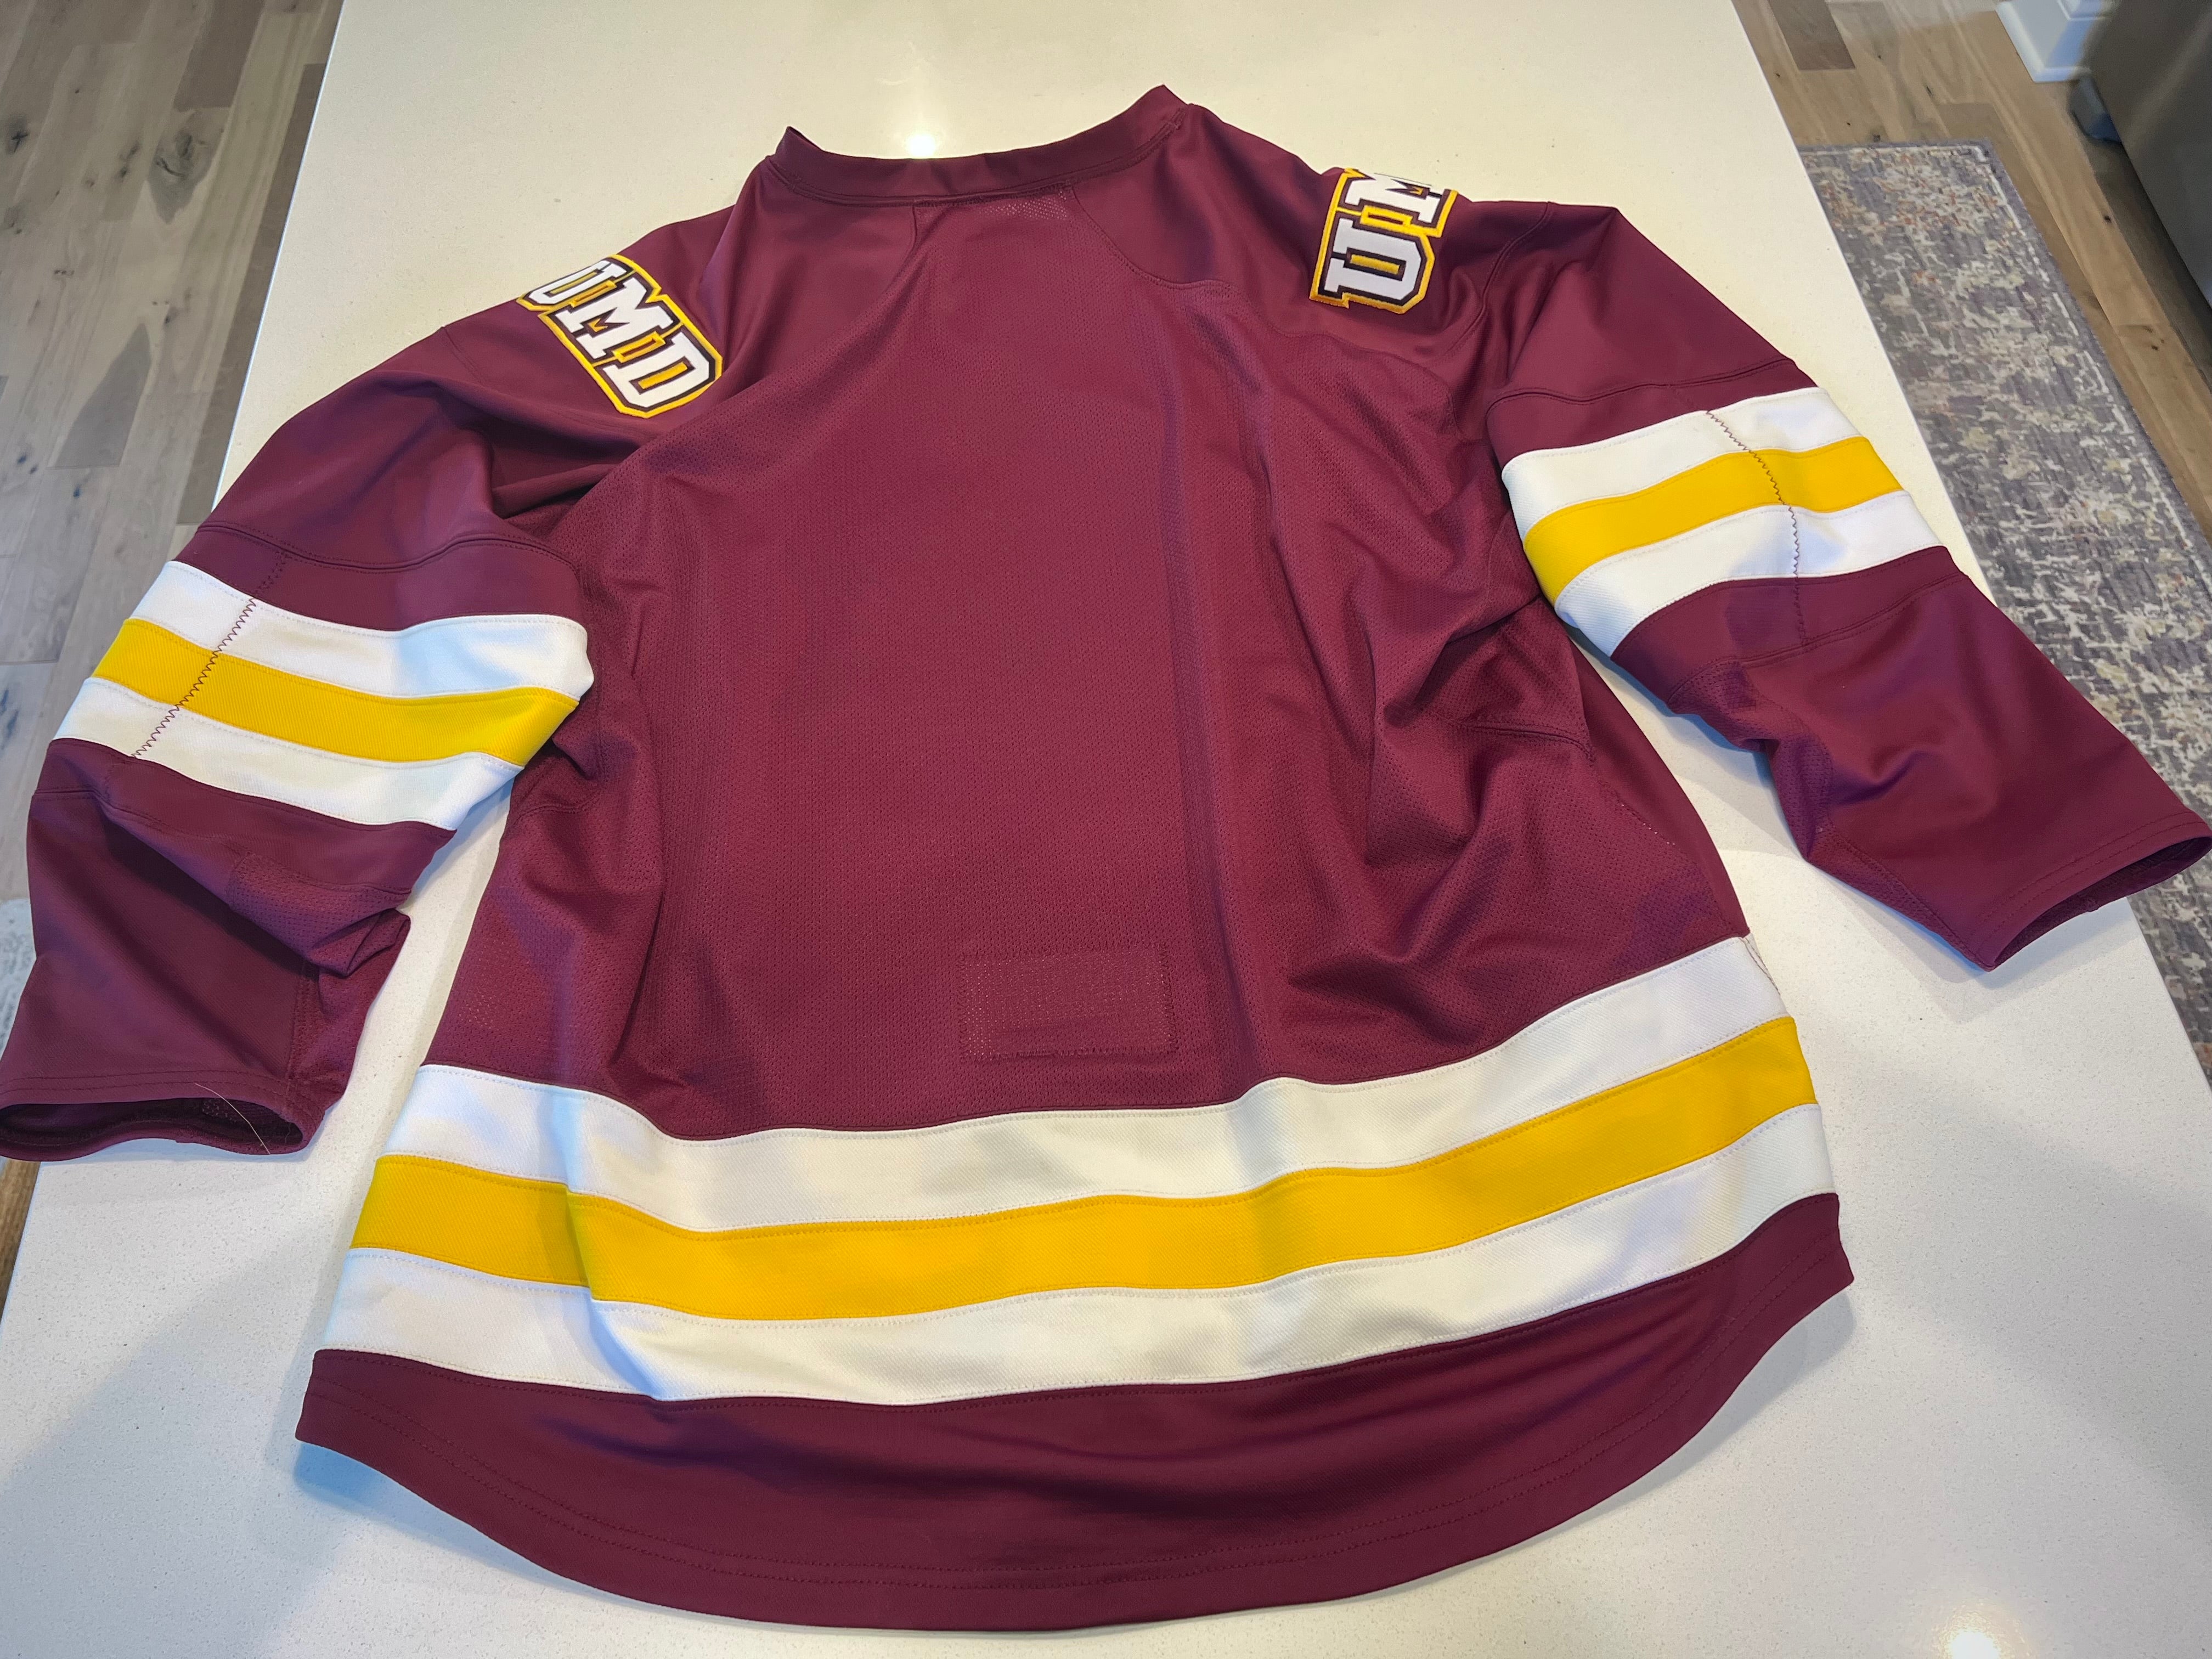 Under Armour Men's Minnesota-Duluth Bulldogs Hockey Jersey - S (Small)